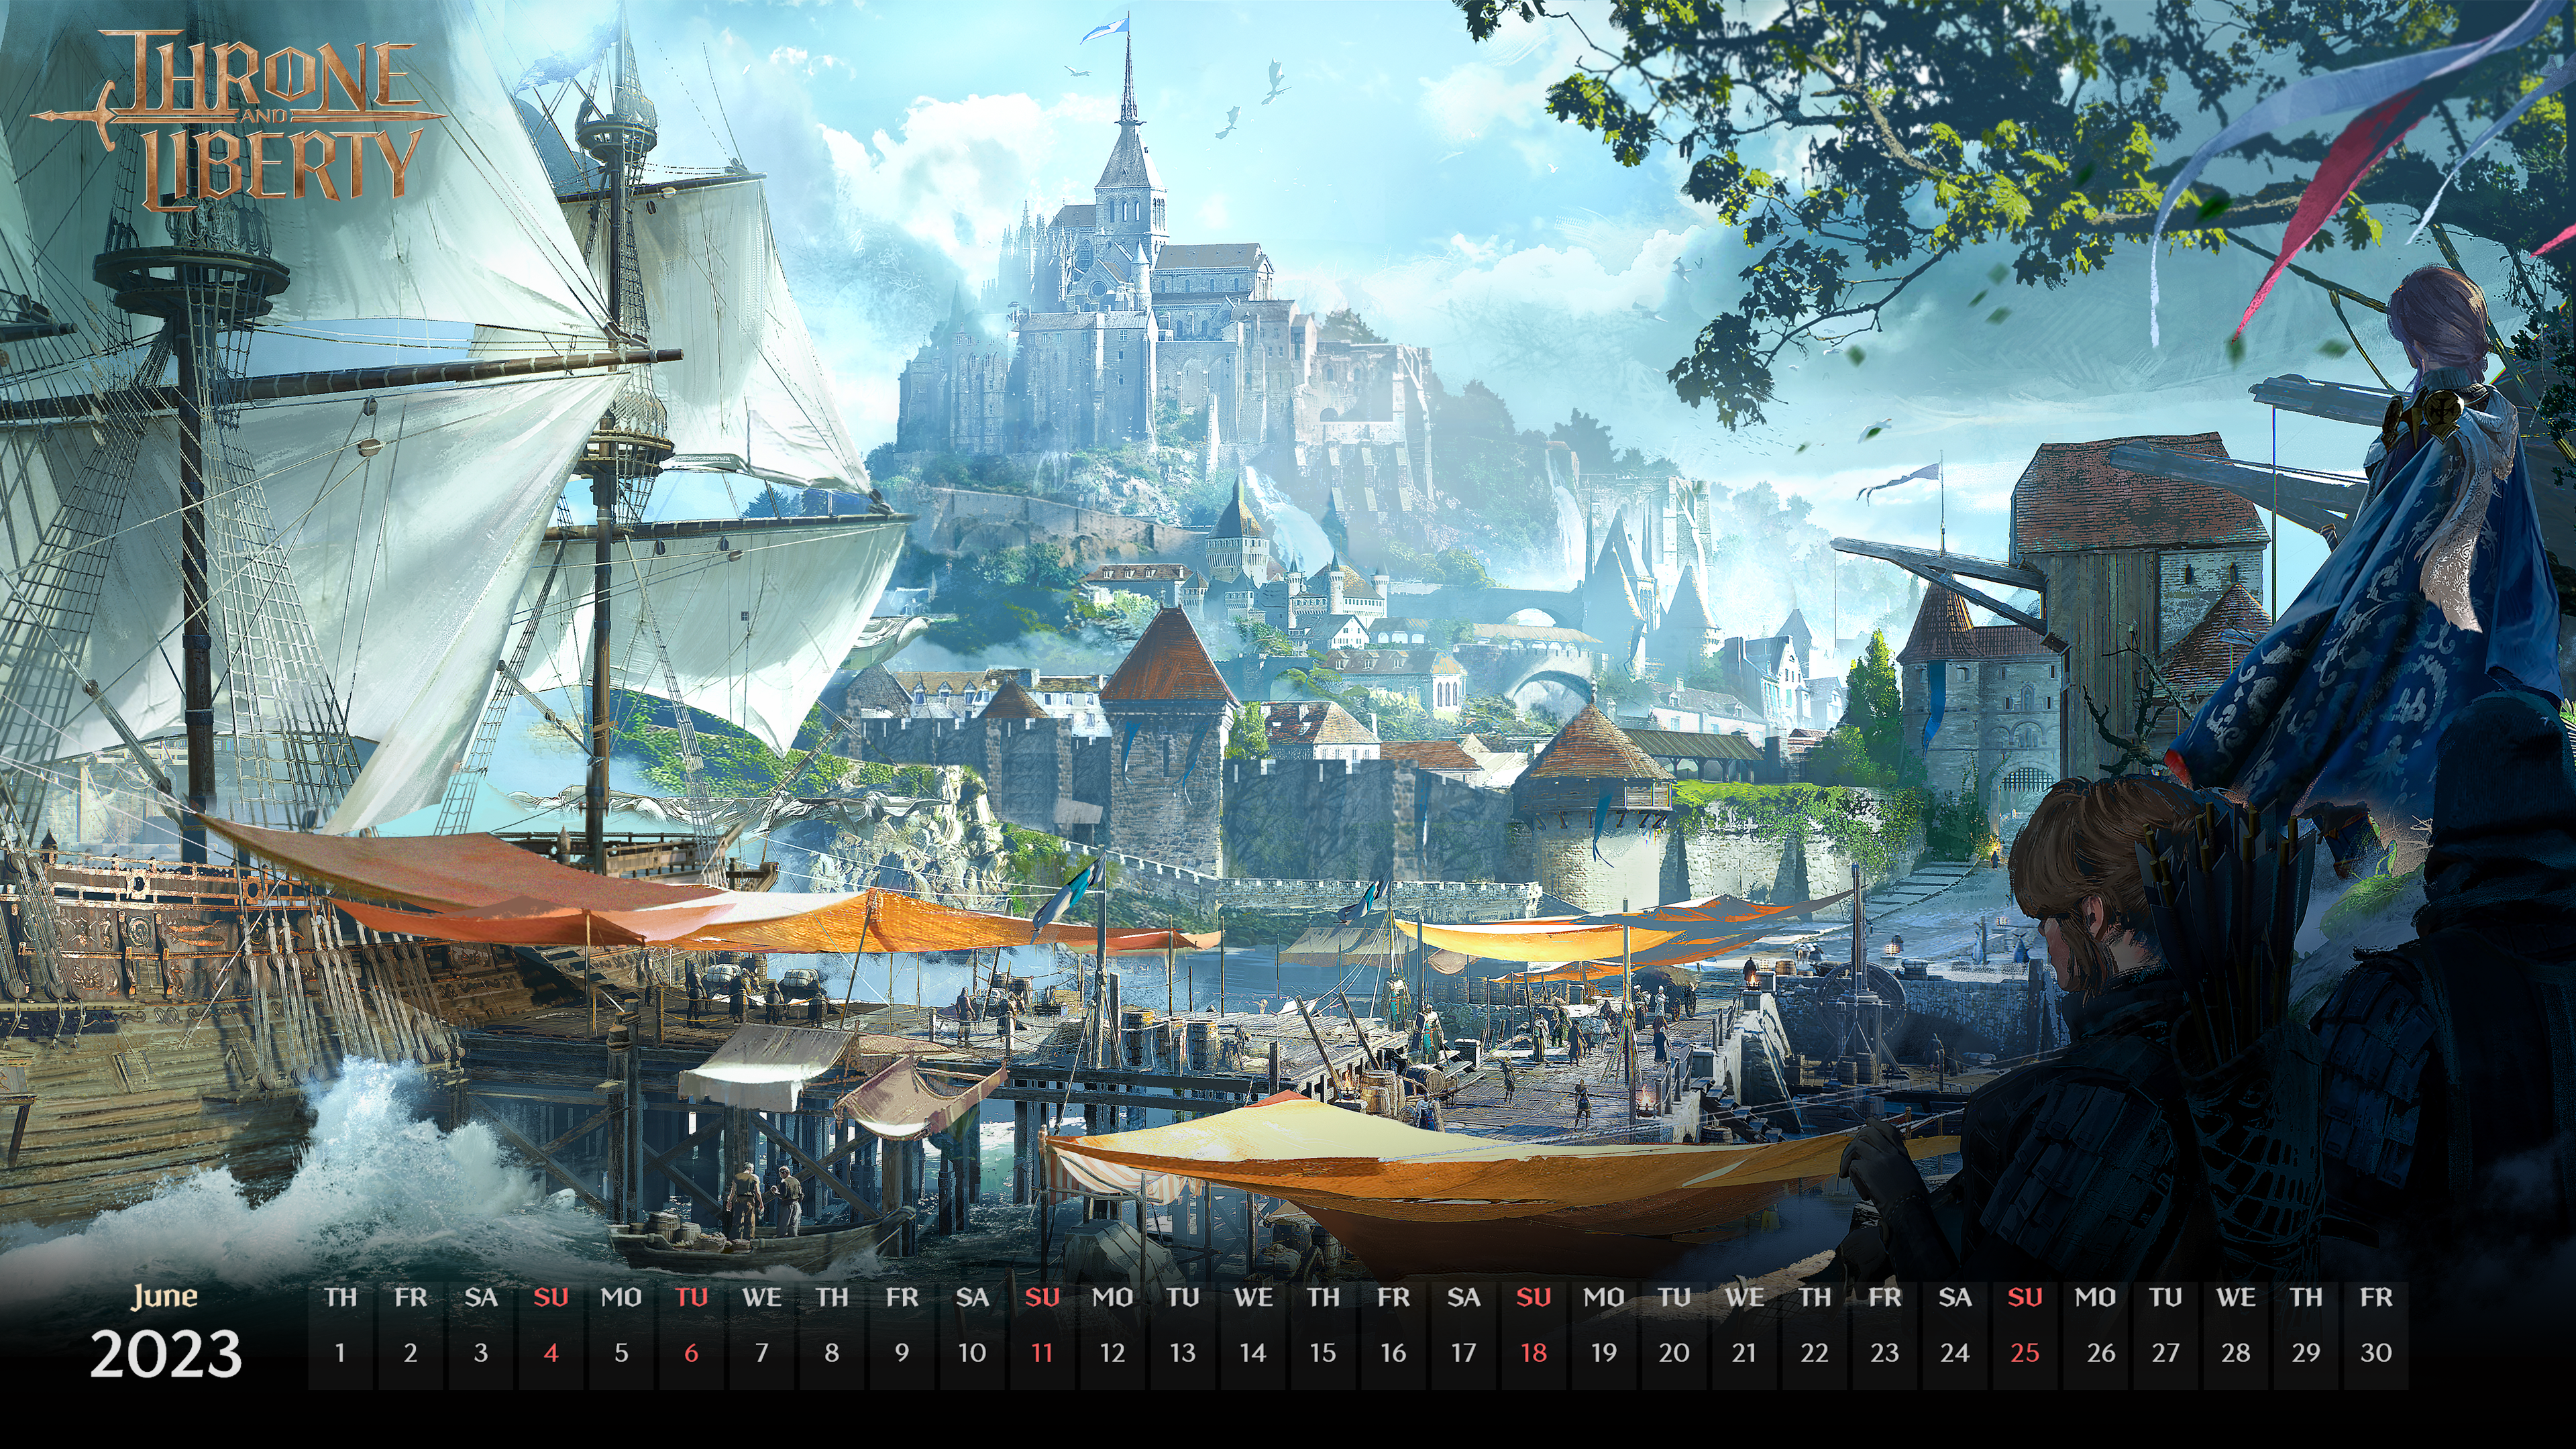 Throne and Liberty Calendar: June